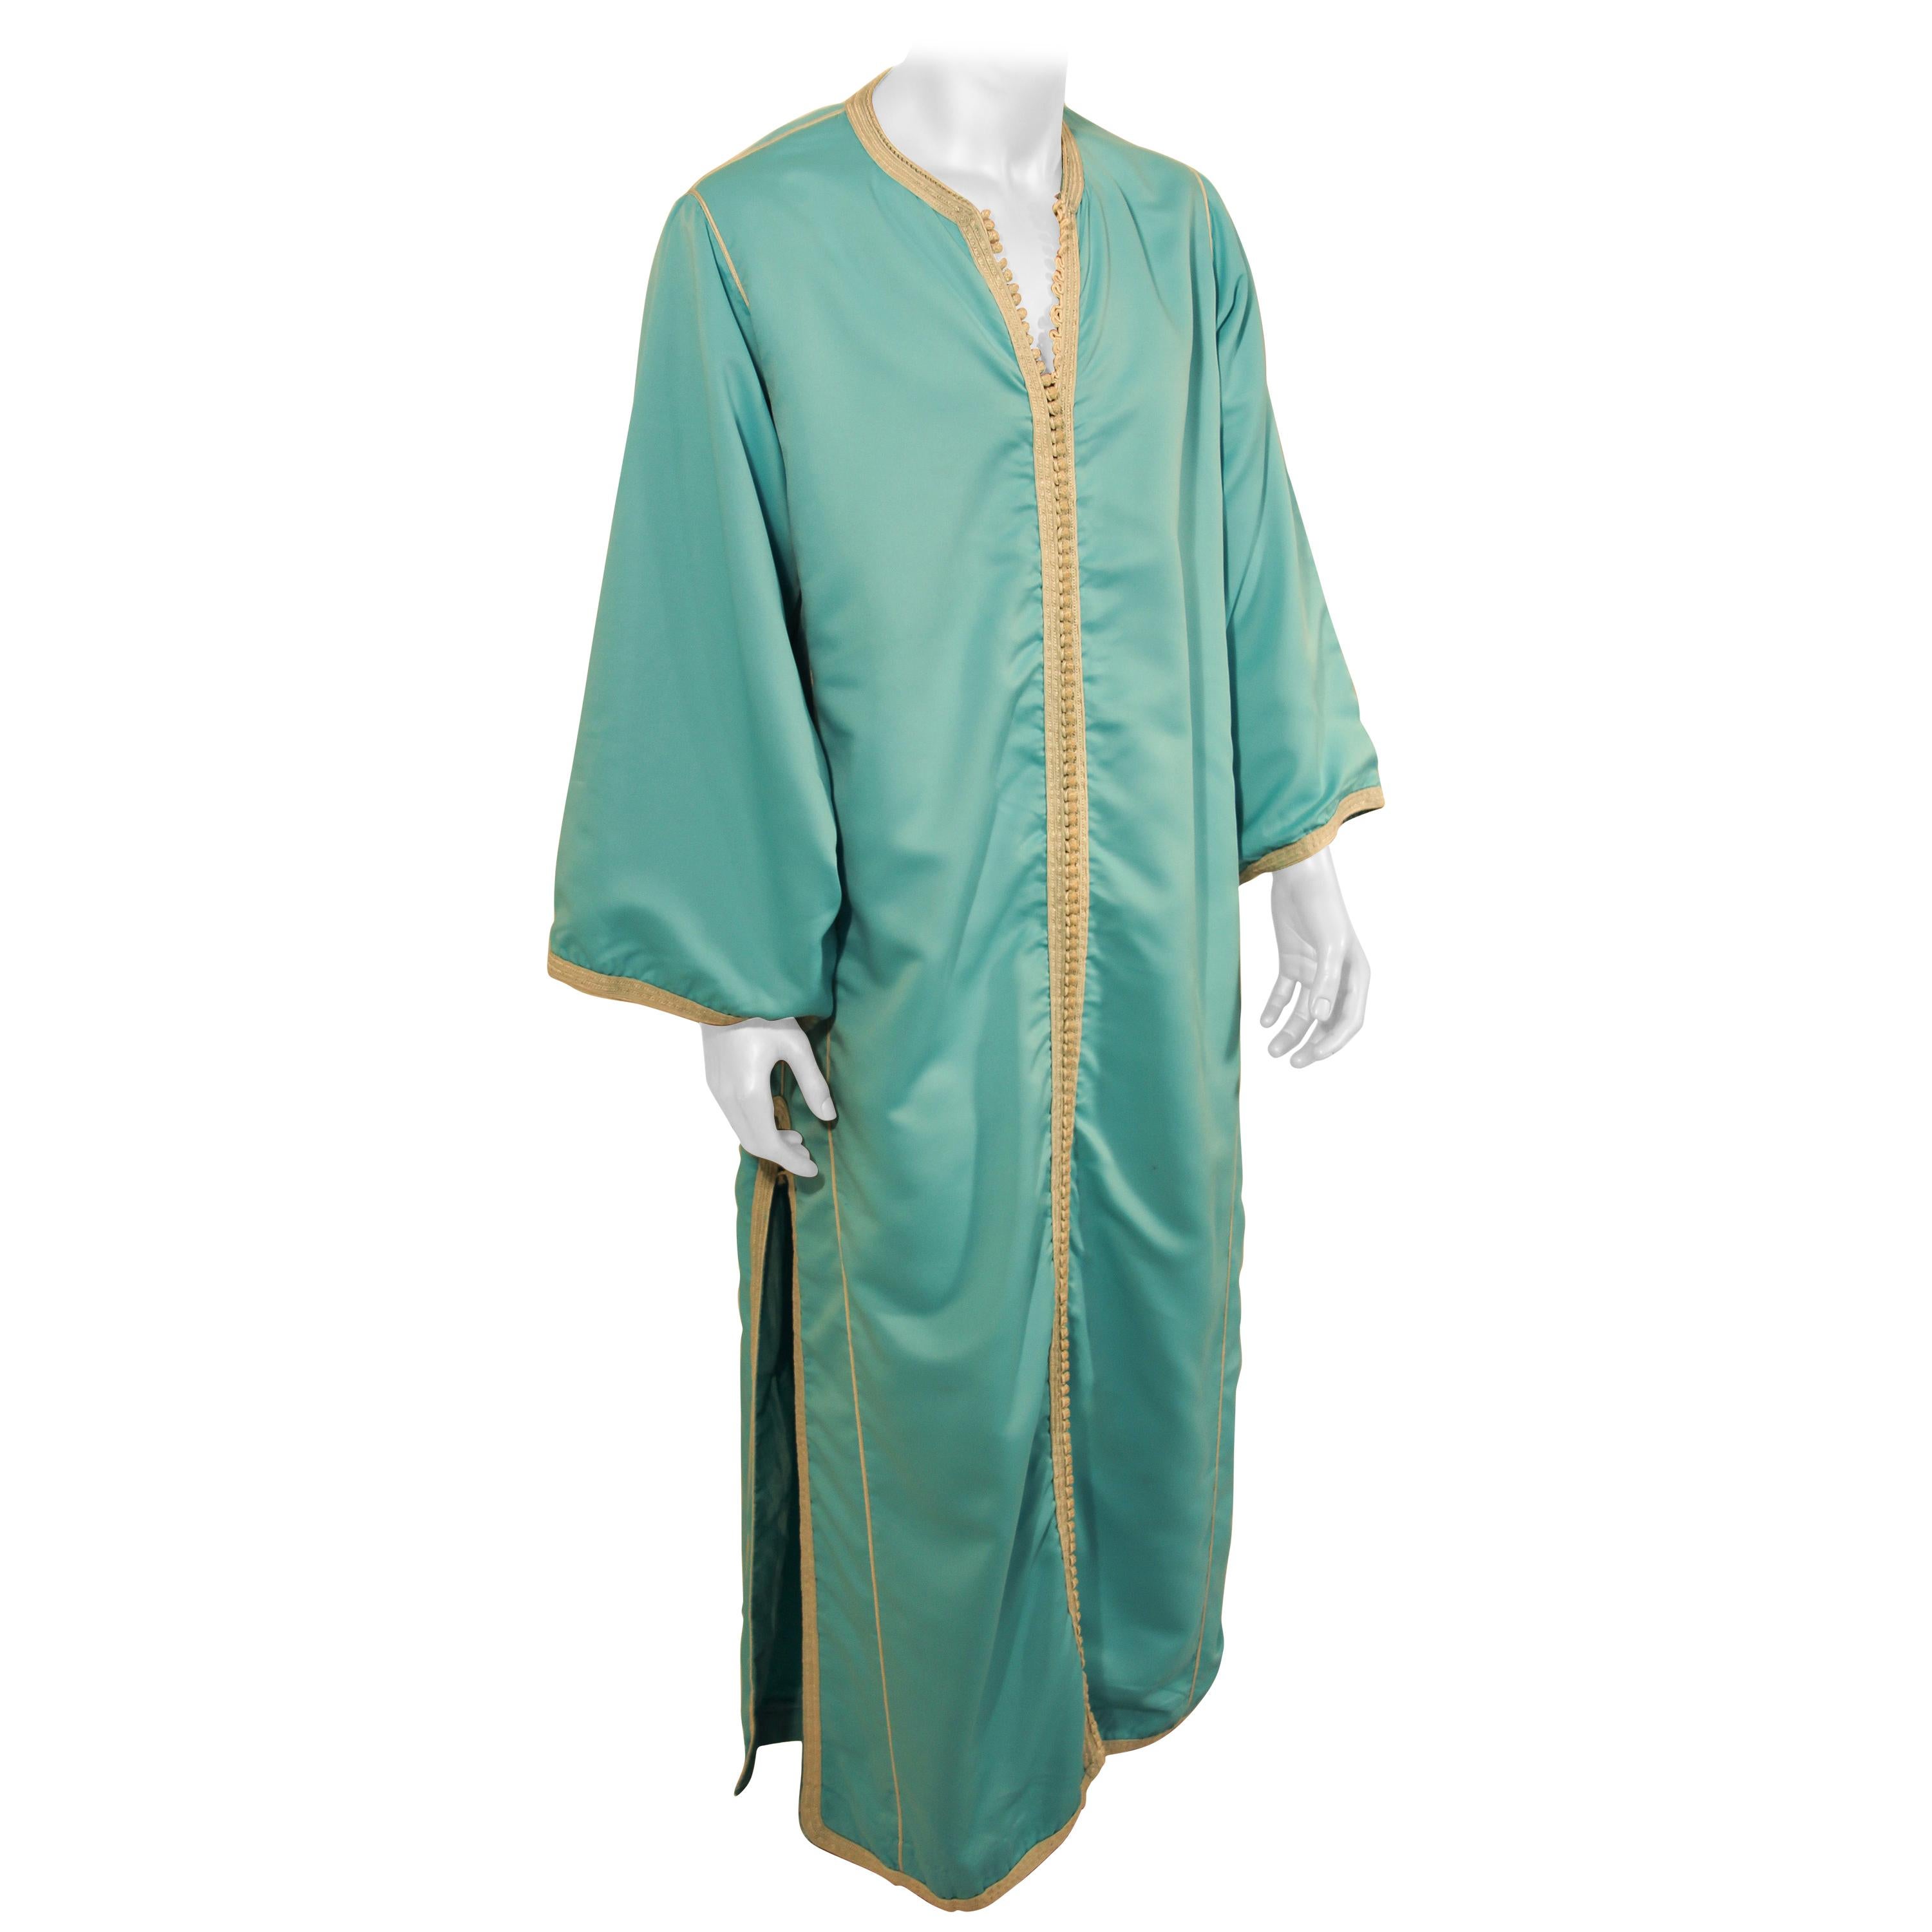 Moorish Turquoise Caftan 1970s Robe For Sale